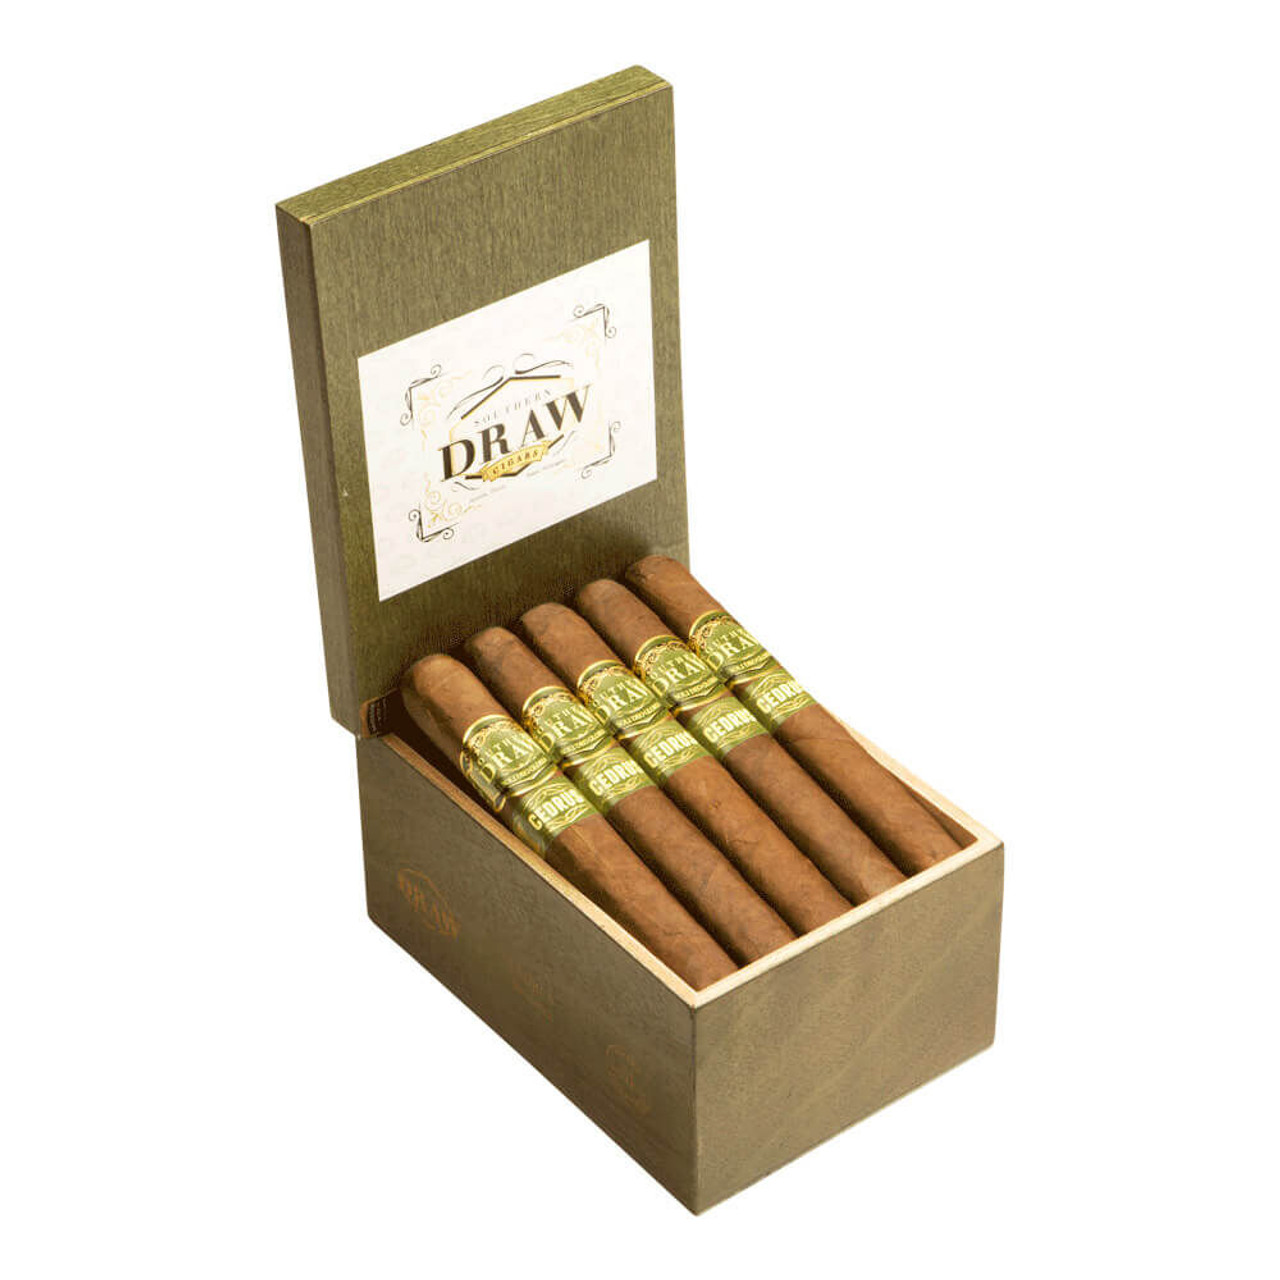 Southern Draw Cedrus Gordo Cigars - 6 x 60 (Box of 20)